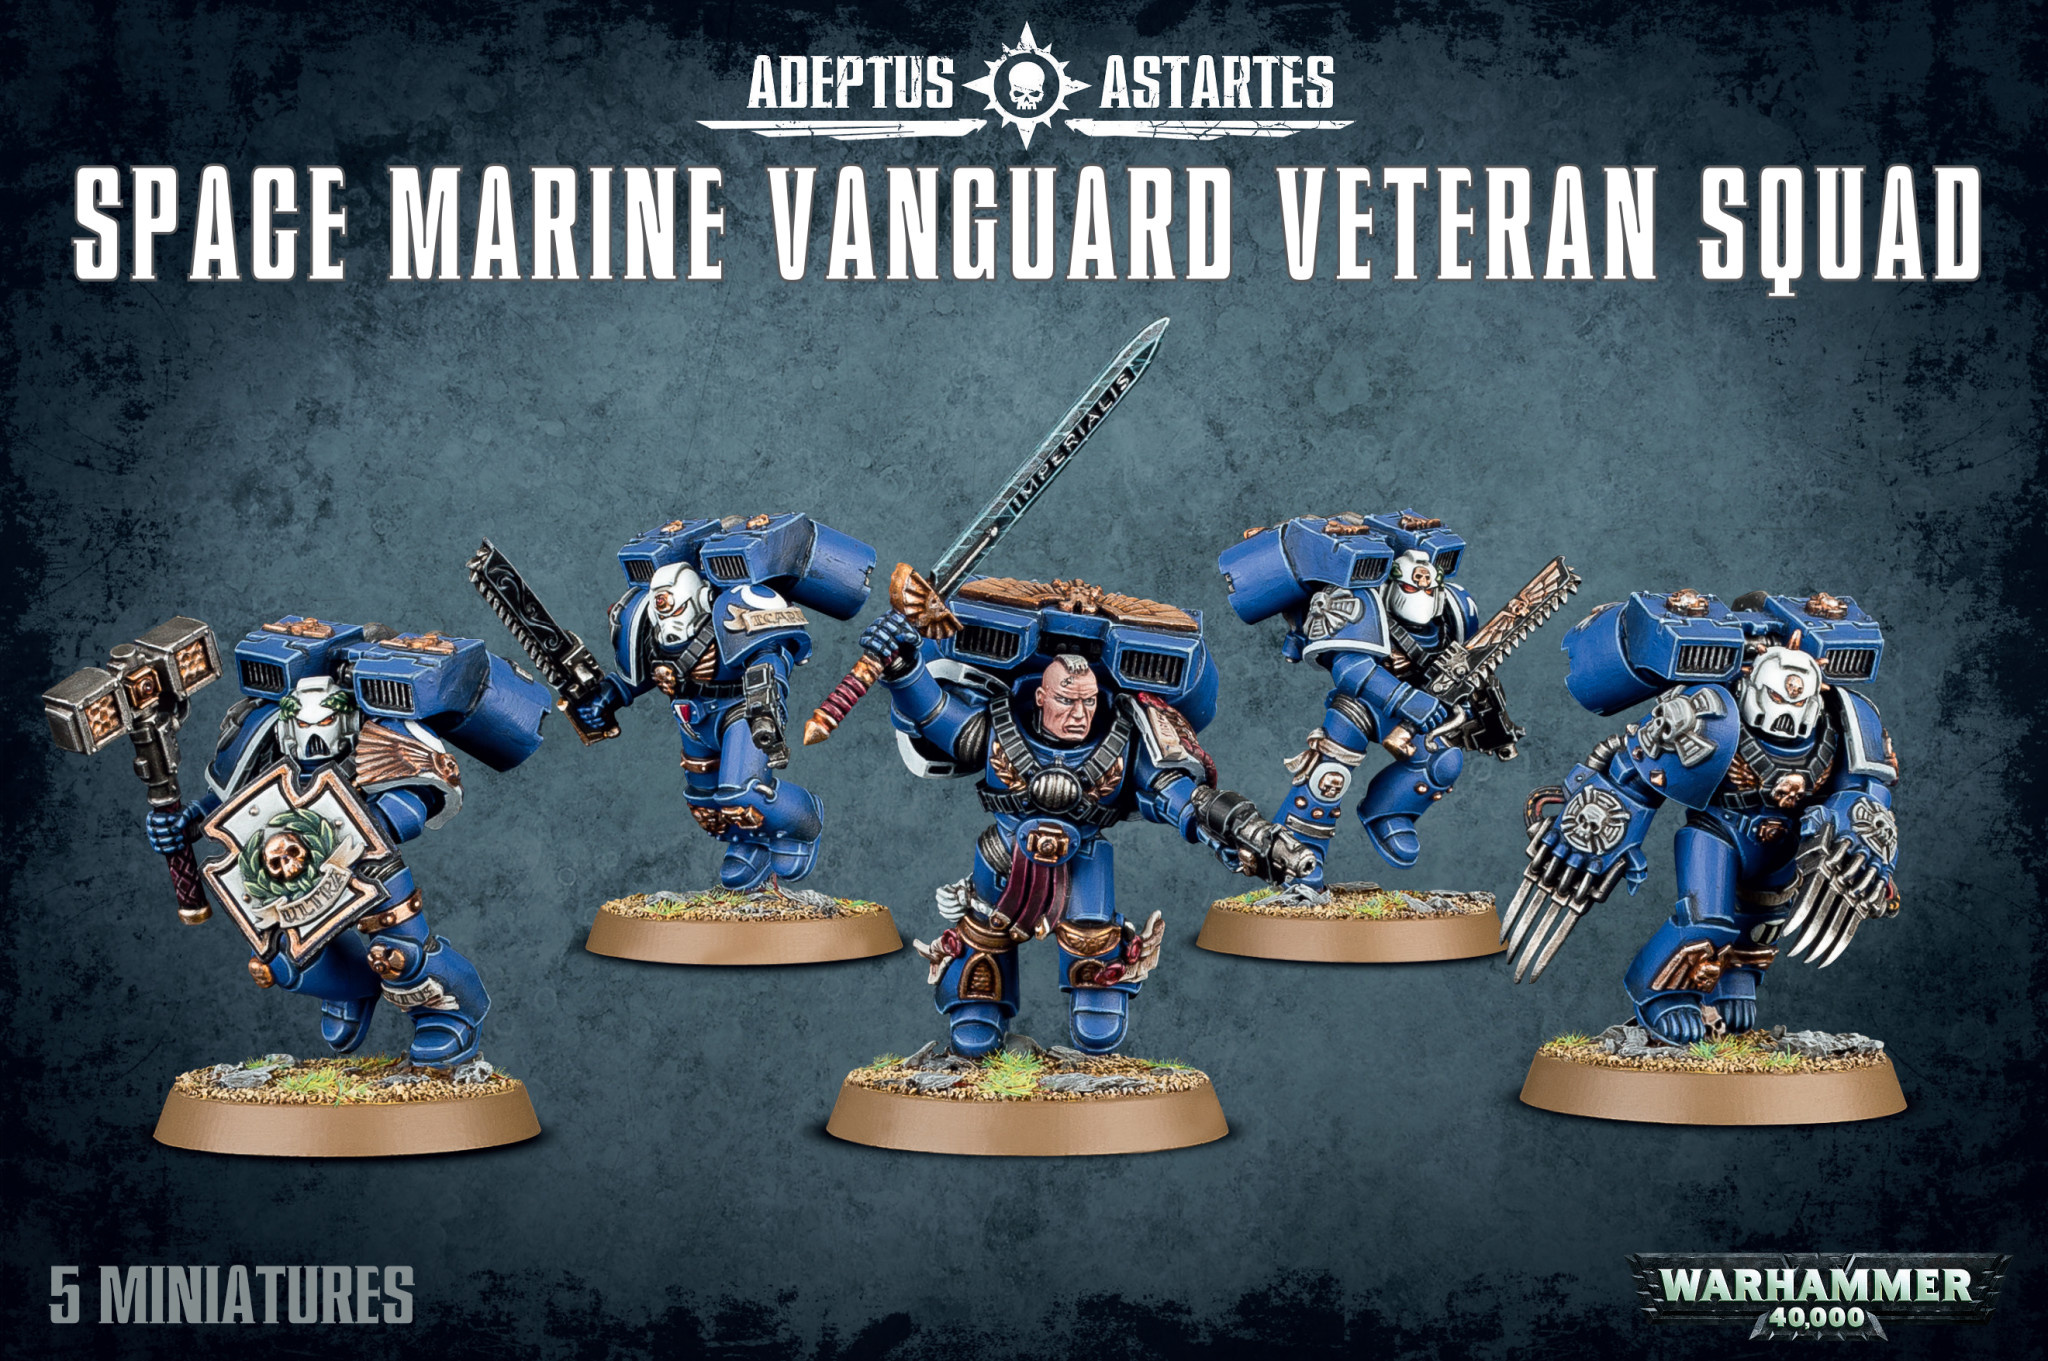 Space marine 2 купить. Vanguard veteran Squad Warhammer. Vanguard veteran Squad Space Marine Vanguard. Warhammer 40,000 : Space Marine veteran. Vanguard Space Marines.